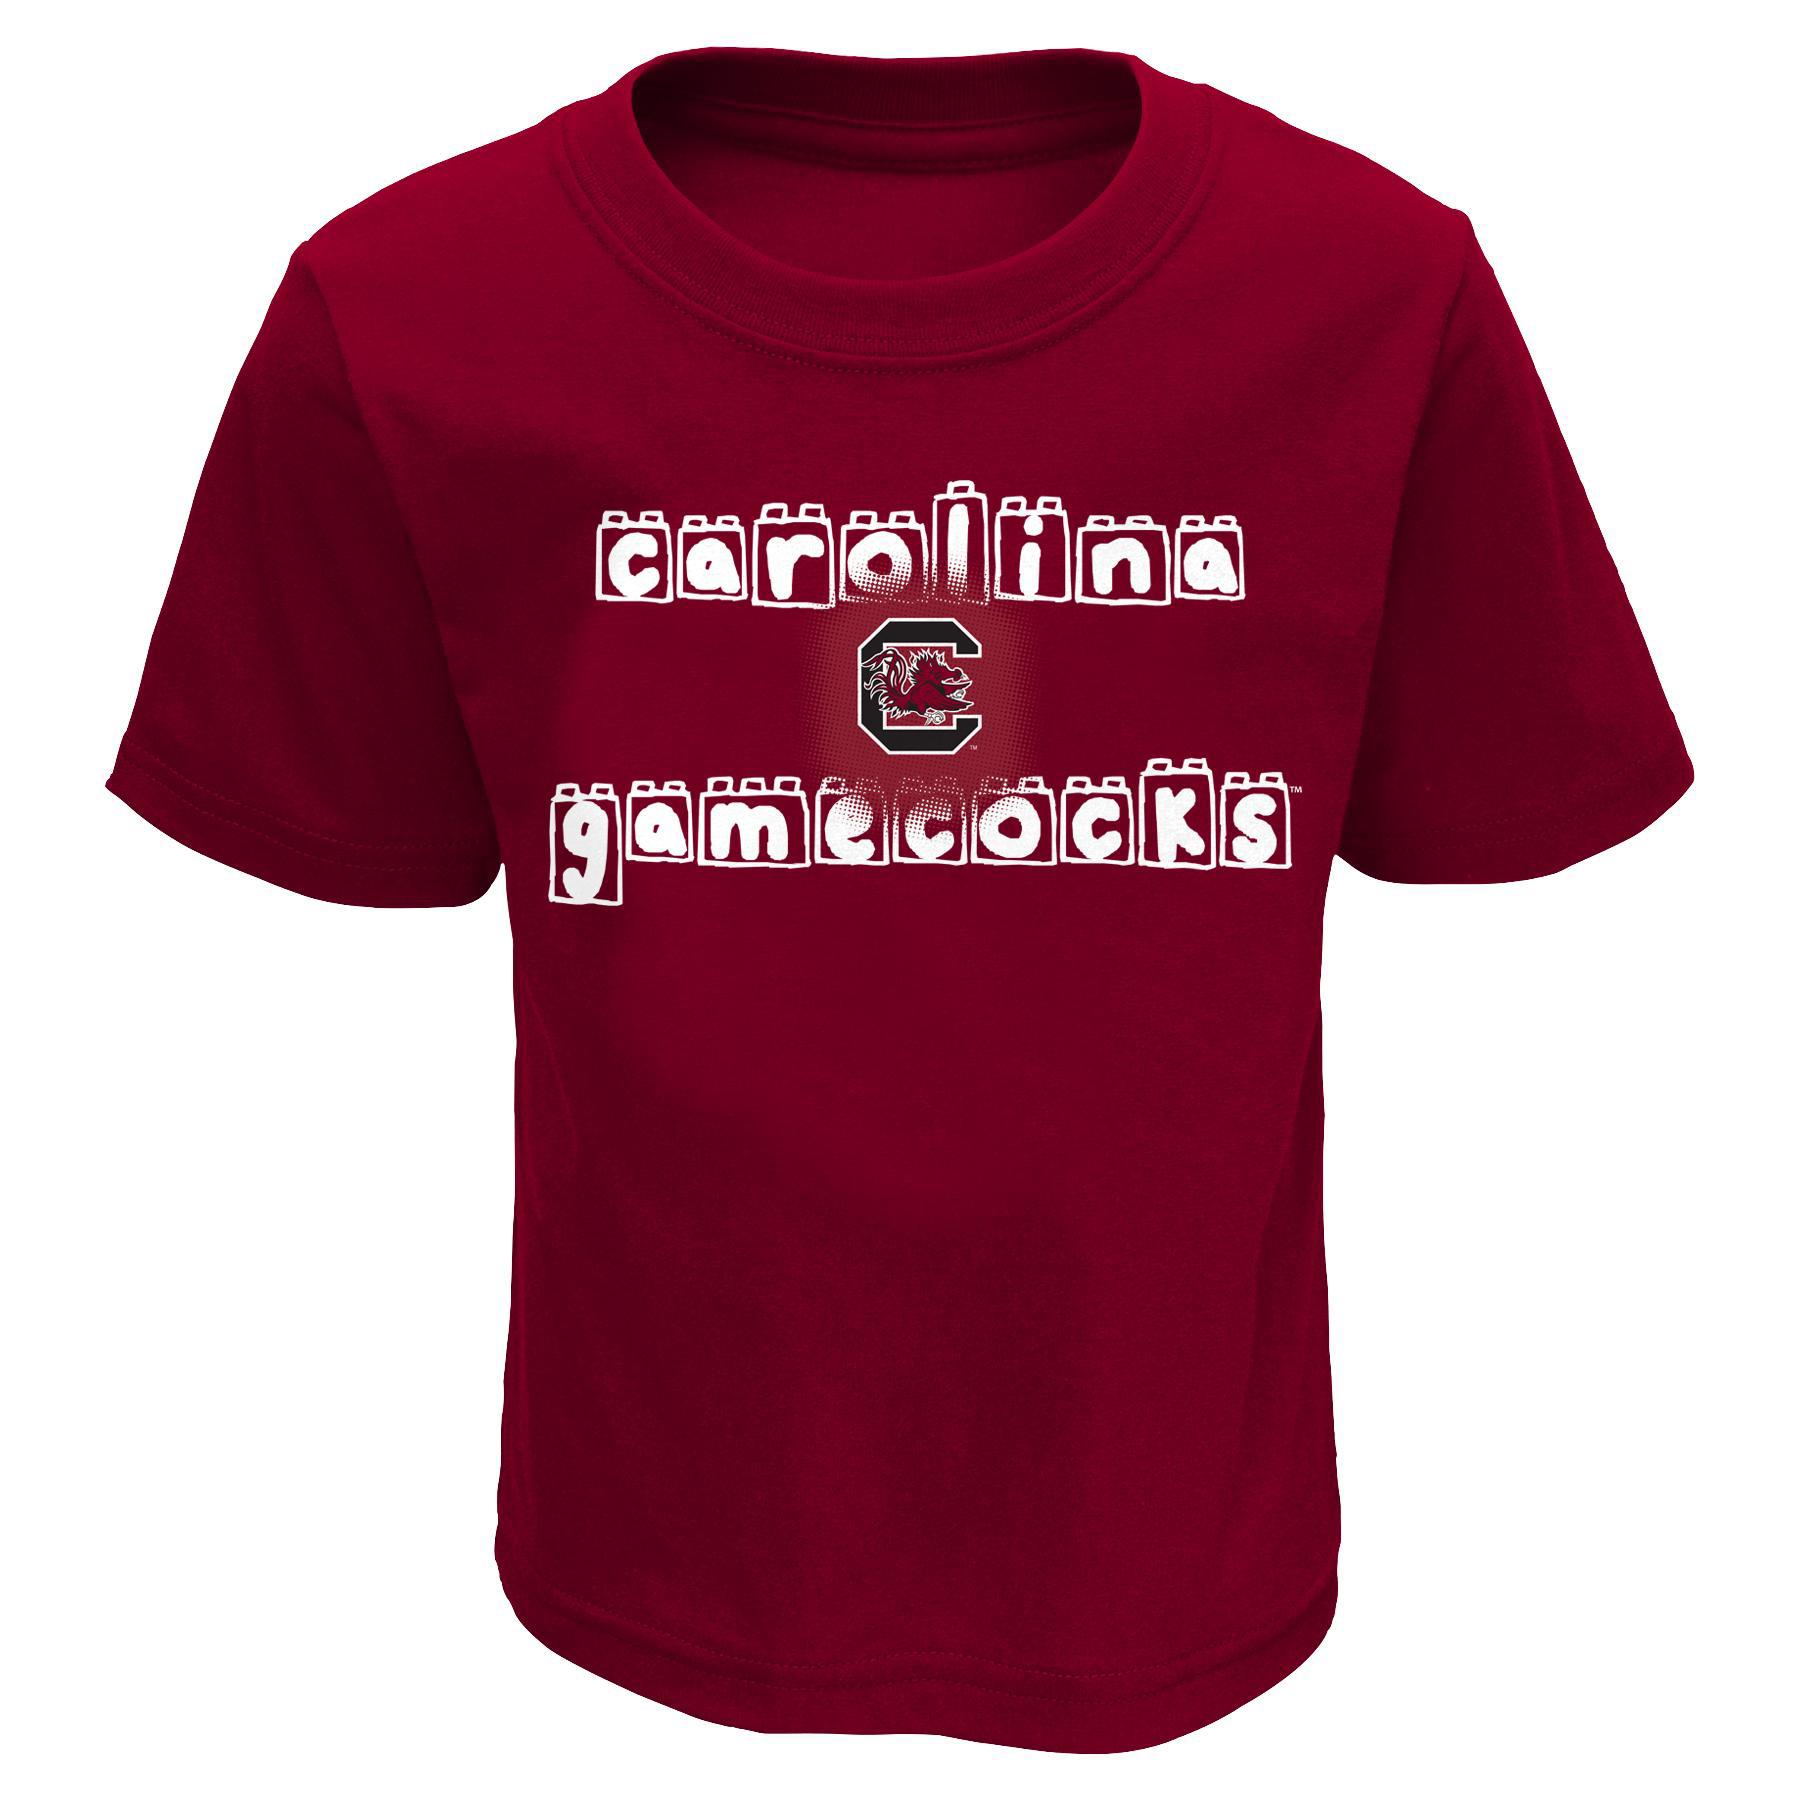 NCAA Toddler's Graphic T-Shirt - South Carolina Gamecocks